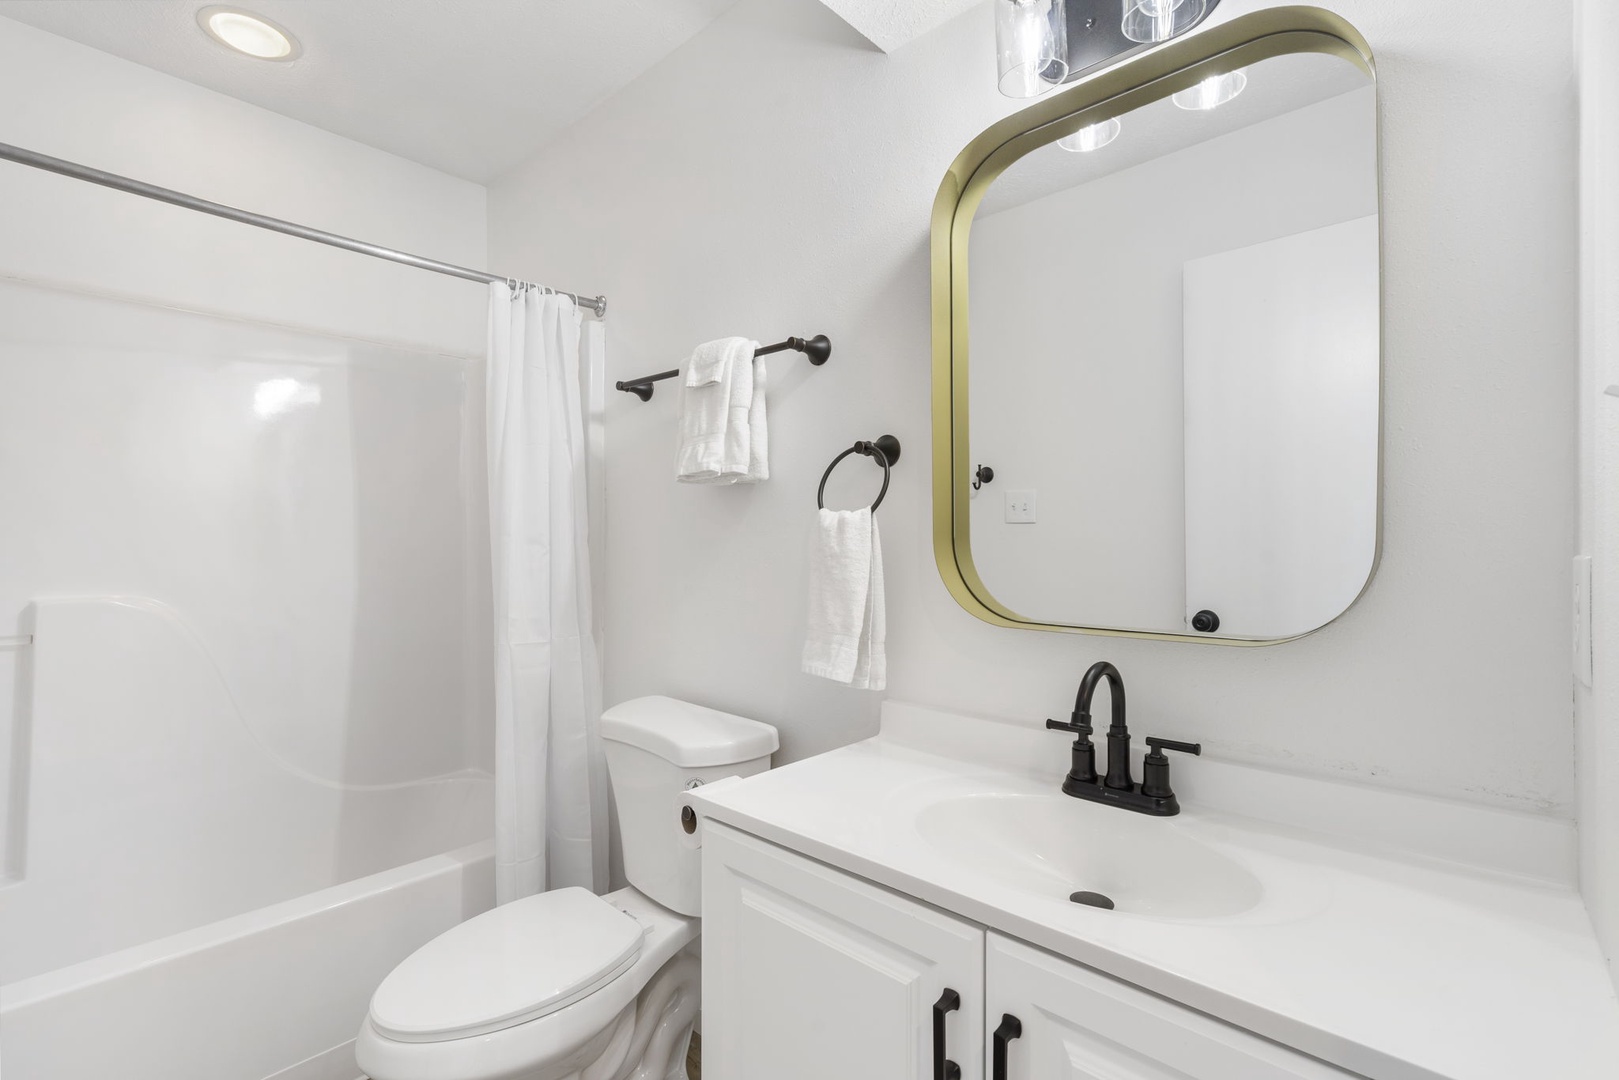 The 2nd floor hall bathroom offers a single vanity & shower/tub combo